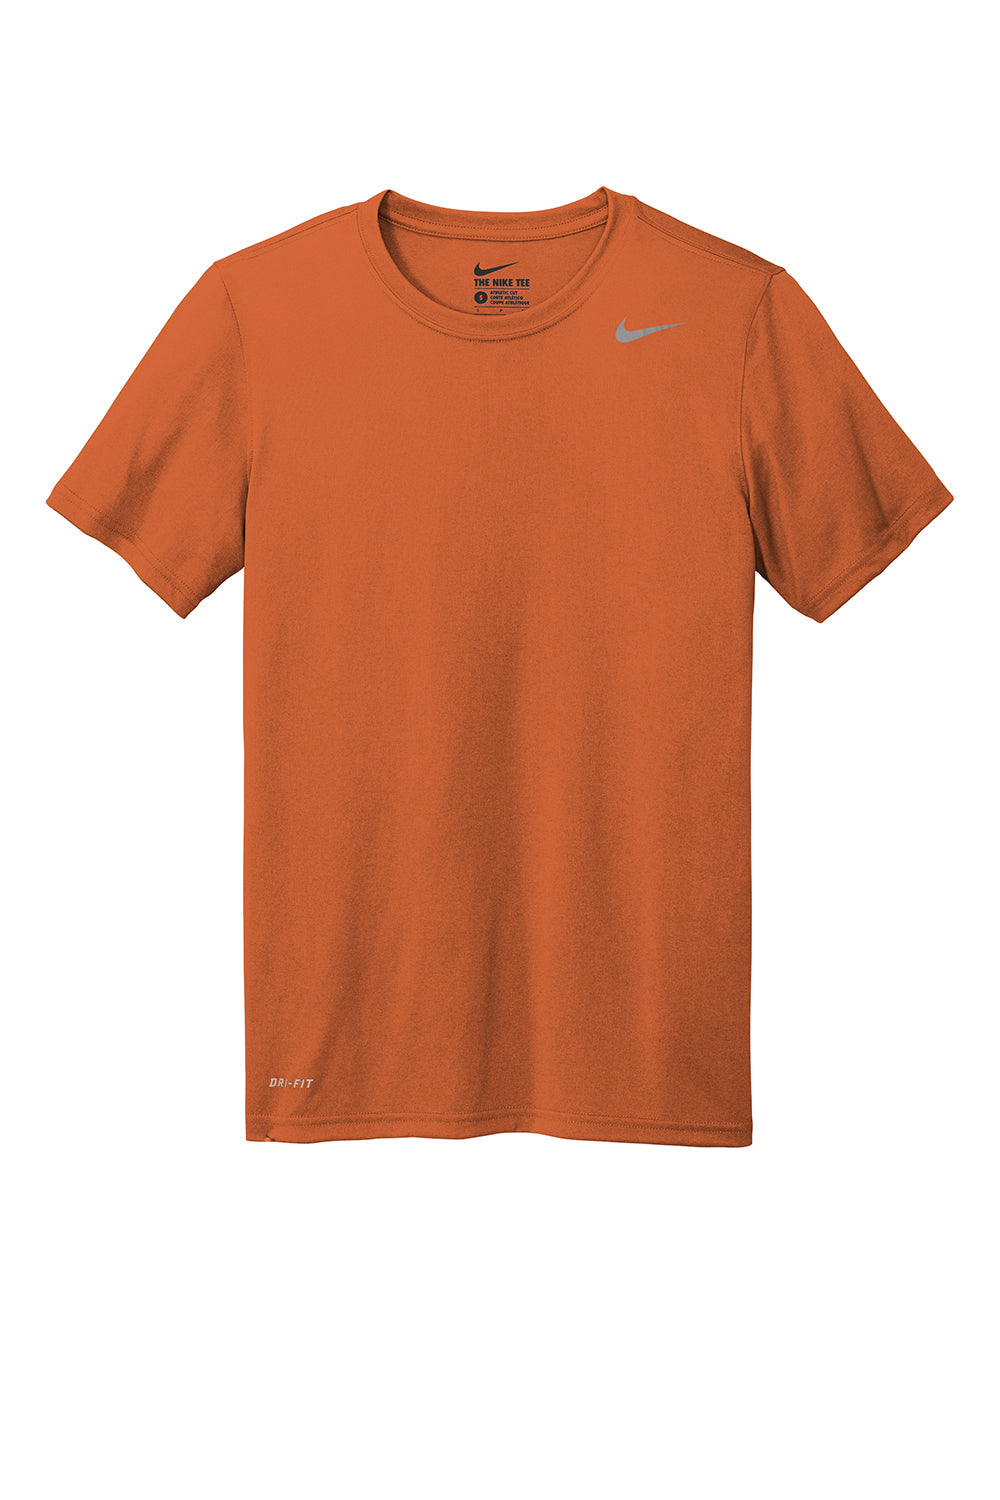 Nike DV7299 Mens Team rLegend Dri-Fit Moisture Wicking Short Sleeve Crewneck T-Shirt Desert Orange Flat Front